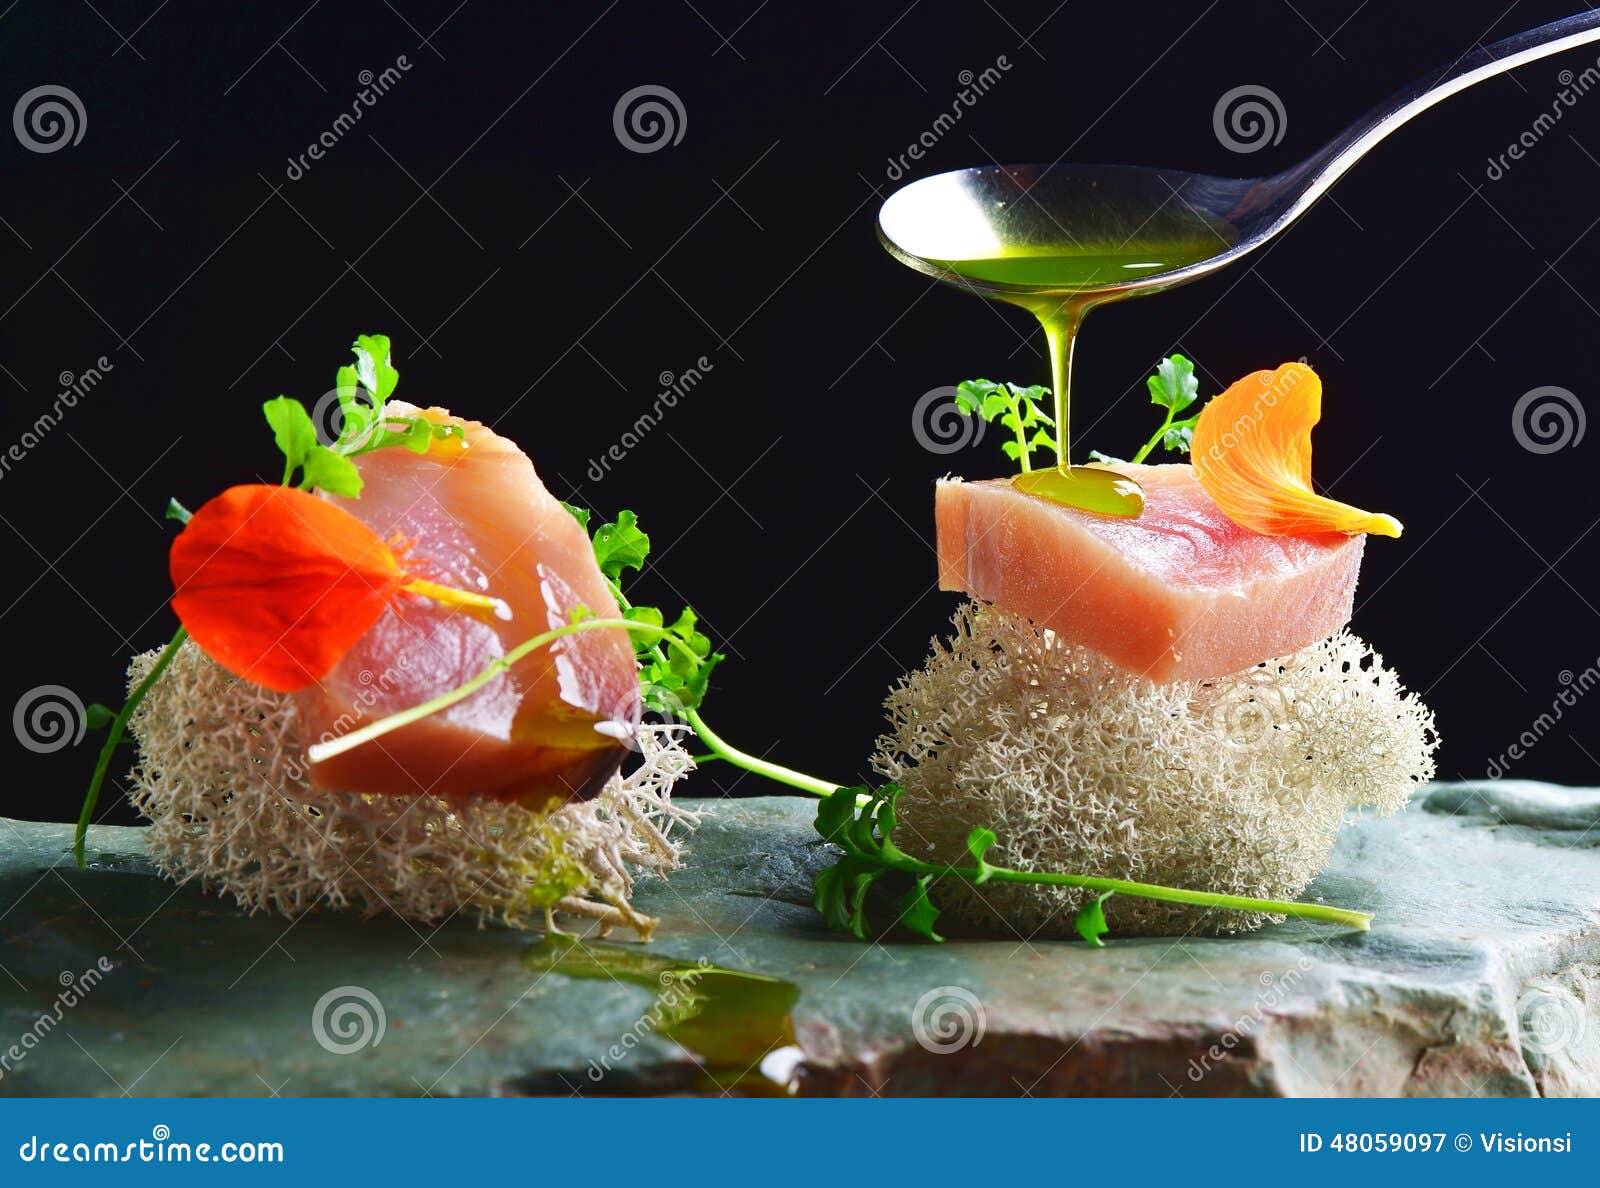 fine dining, fresh raw ahi tuna sashimi served on an ocean sponge